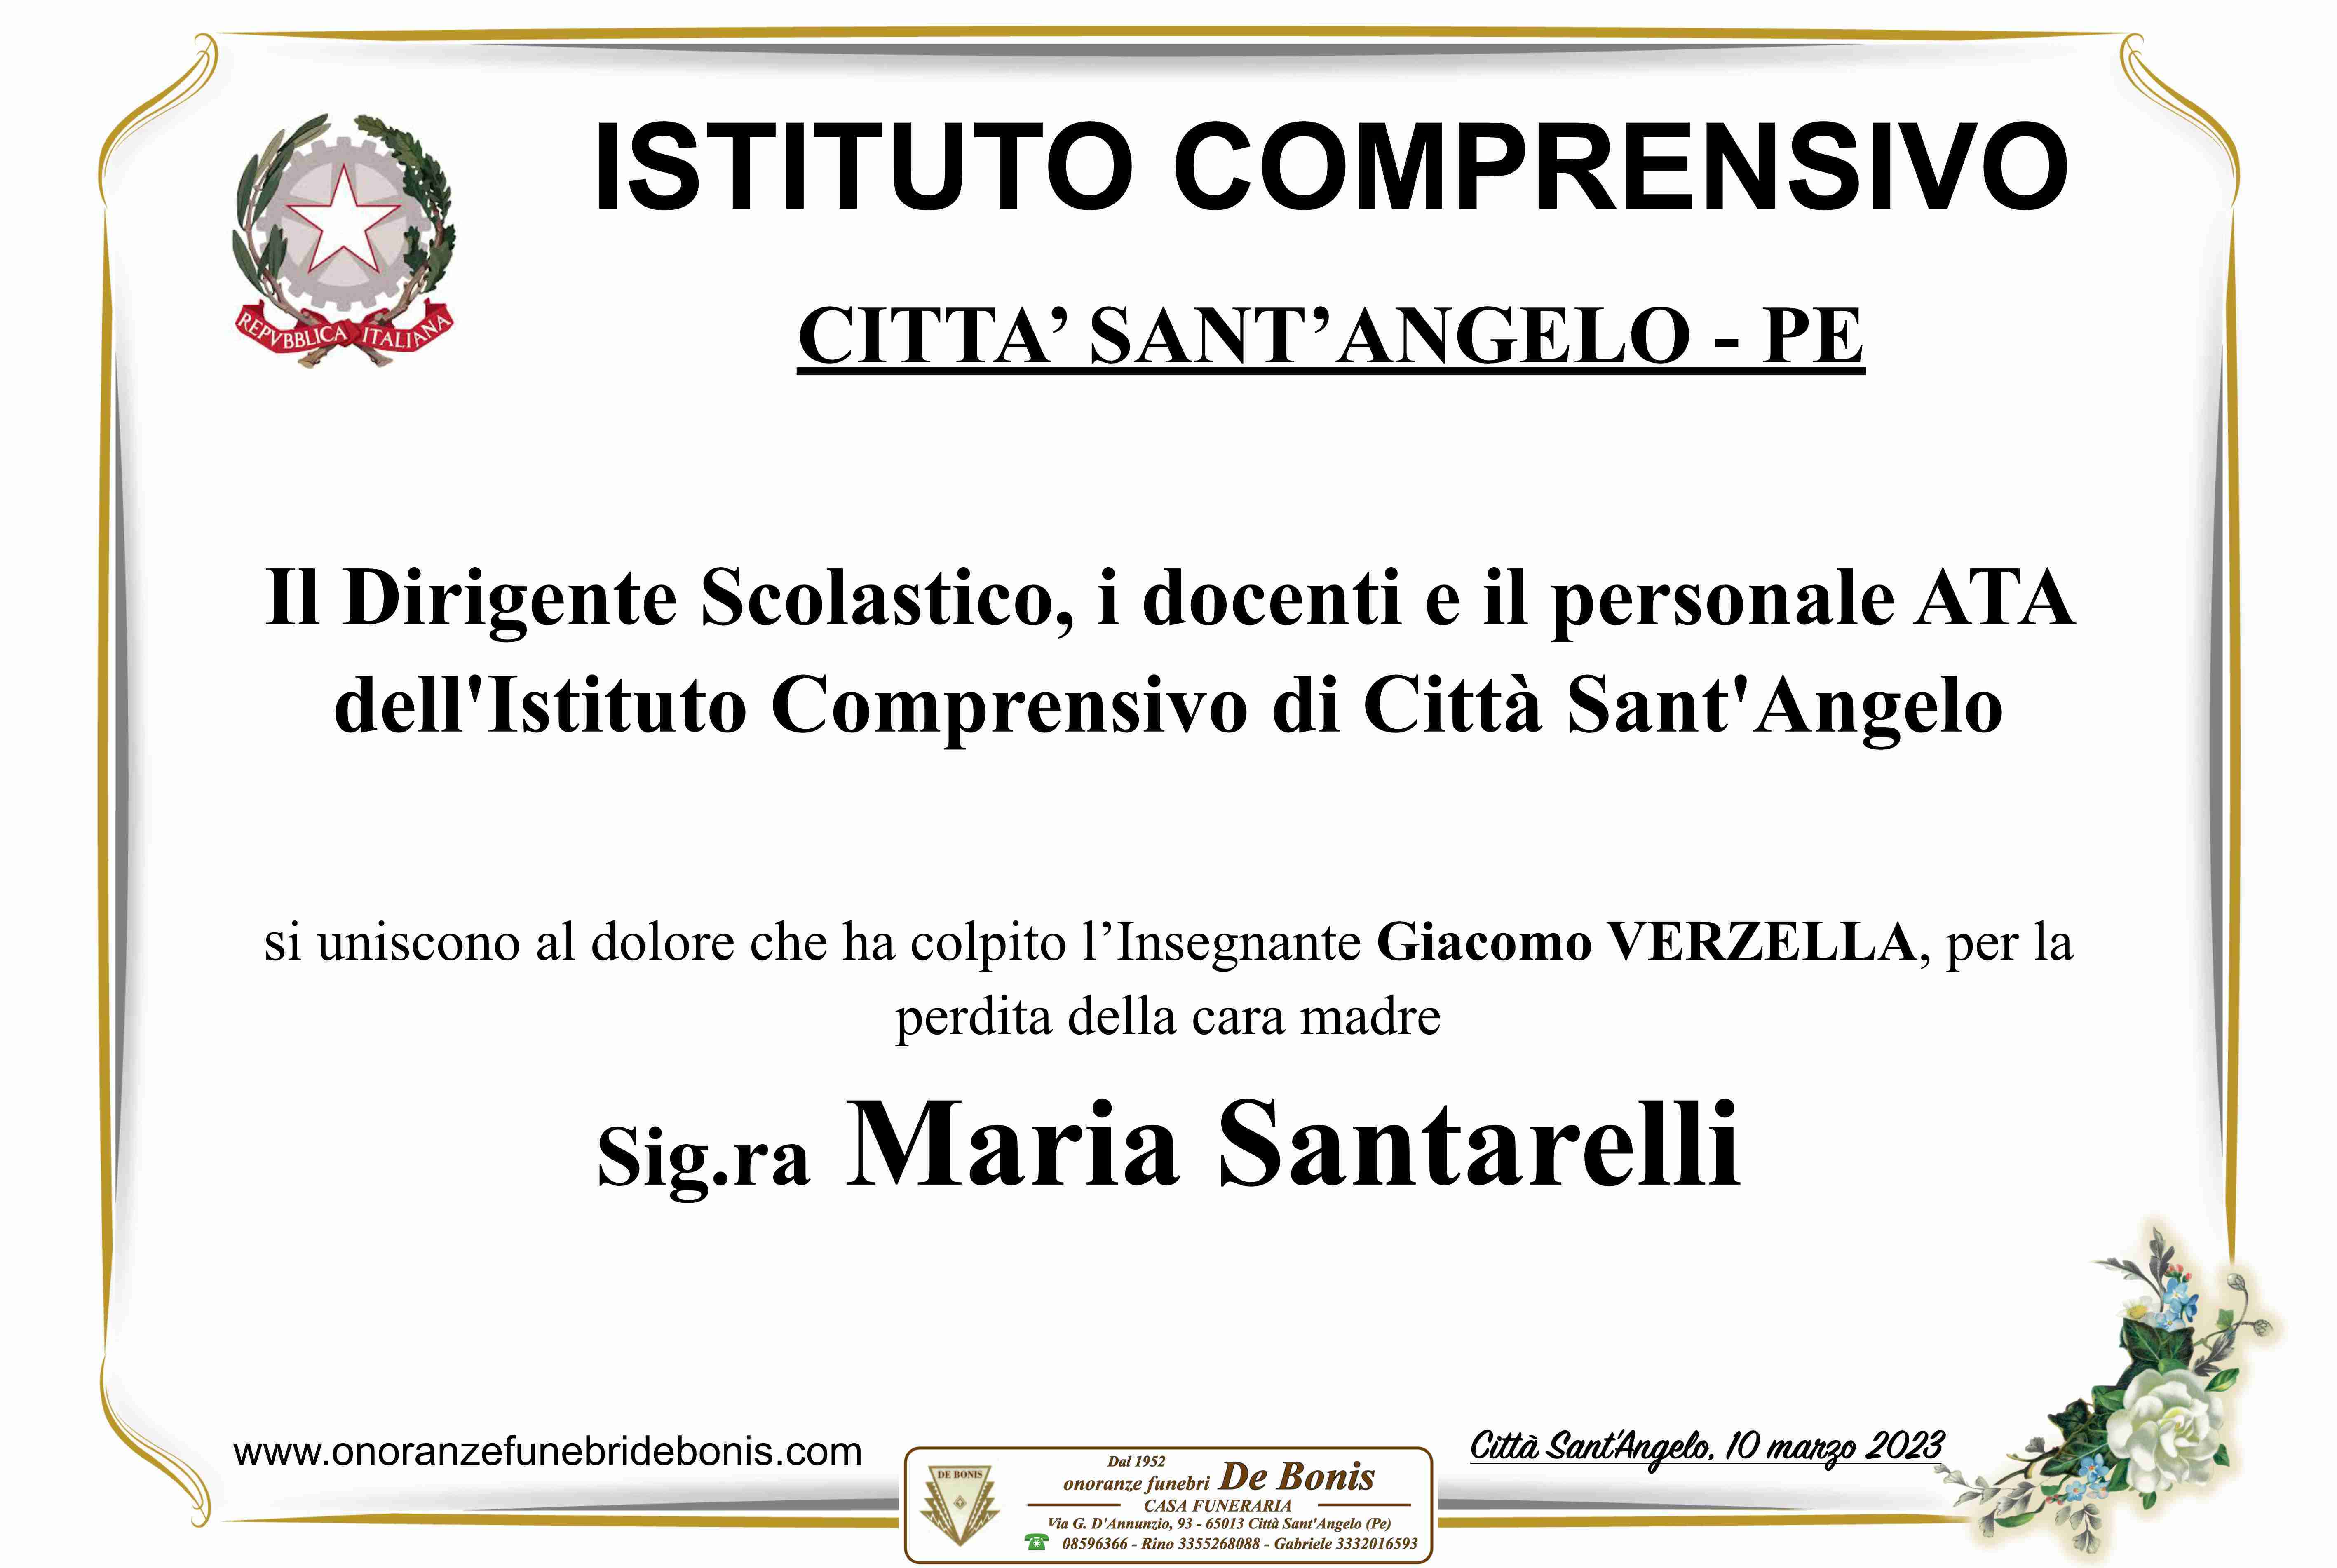 Maria Santarelli